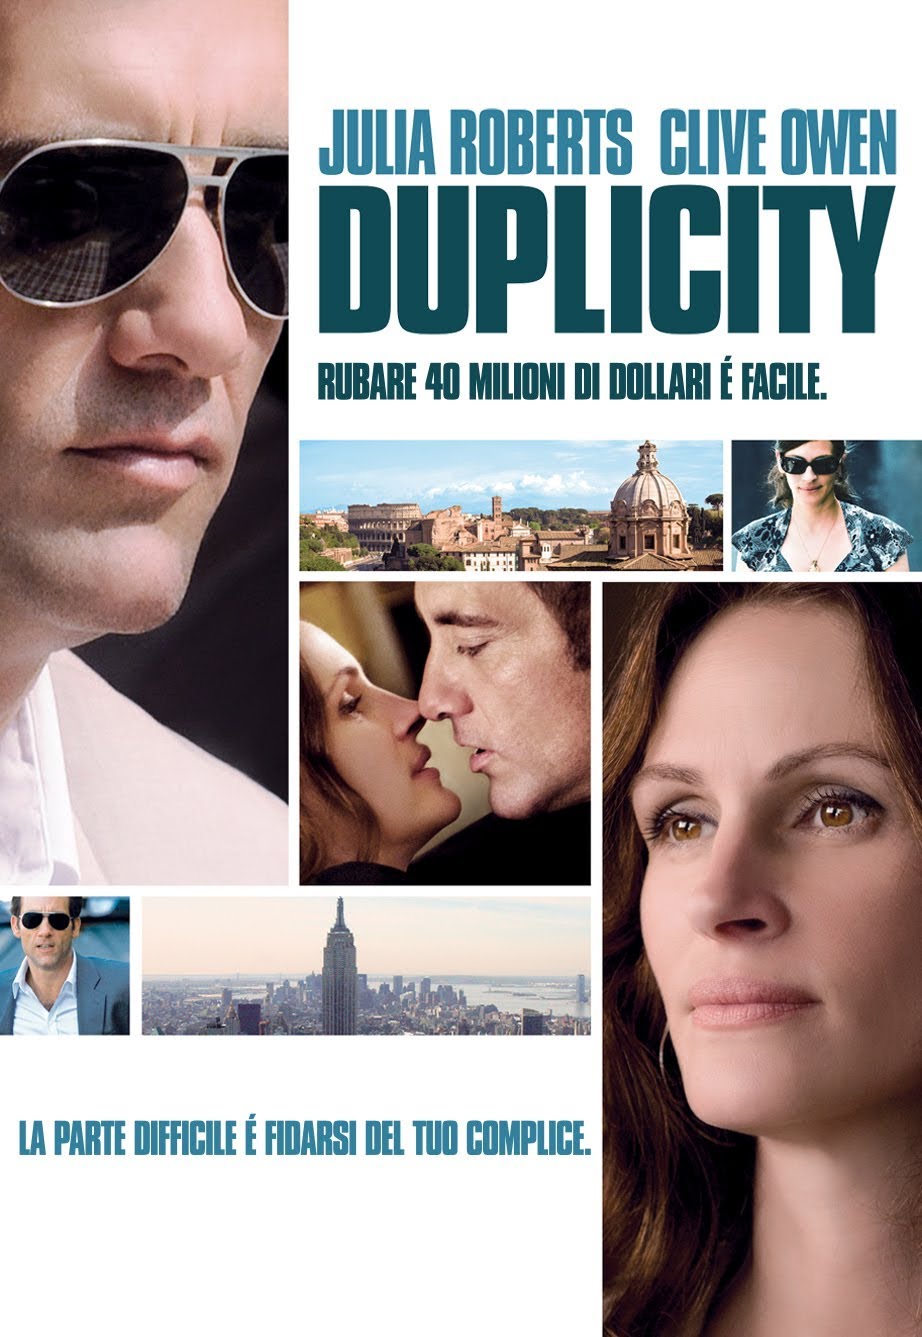 Duplicity [HD] (2009)